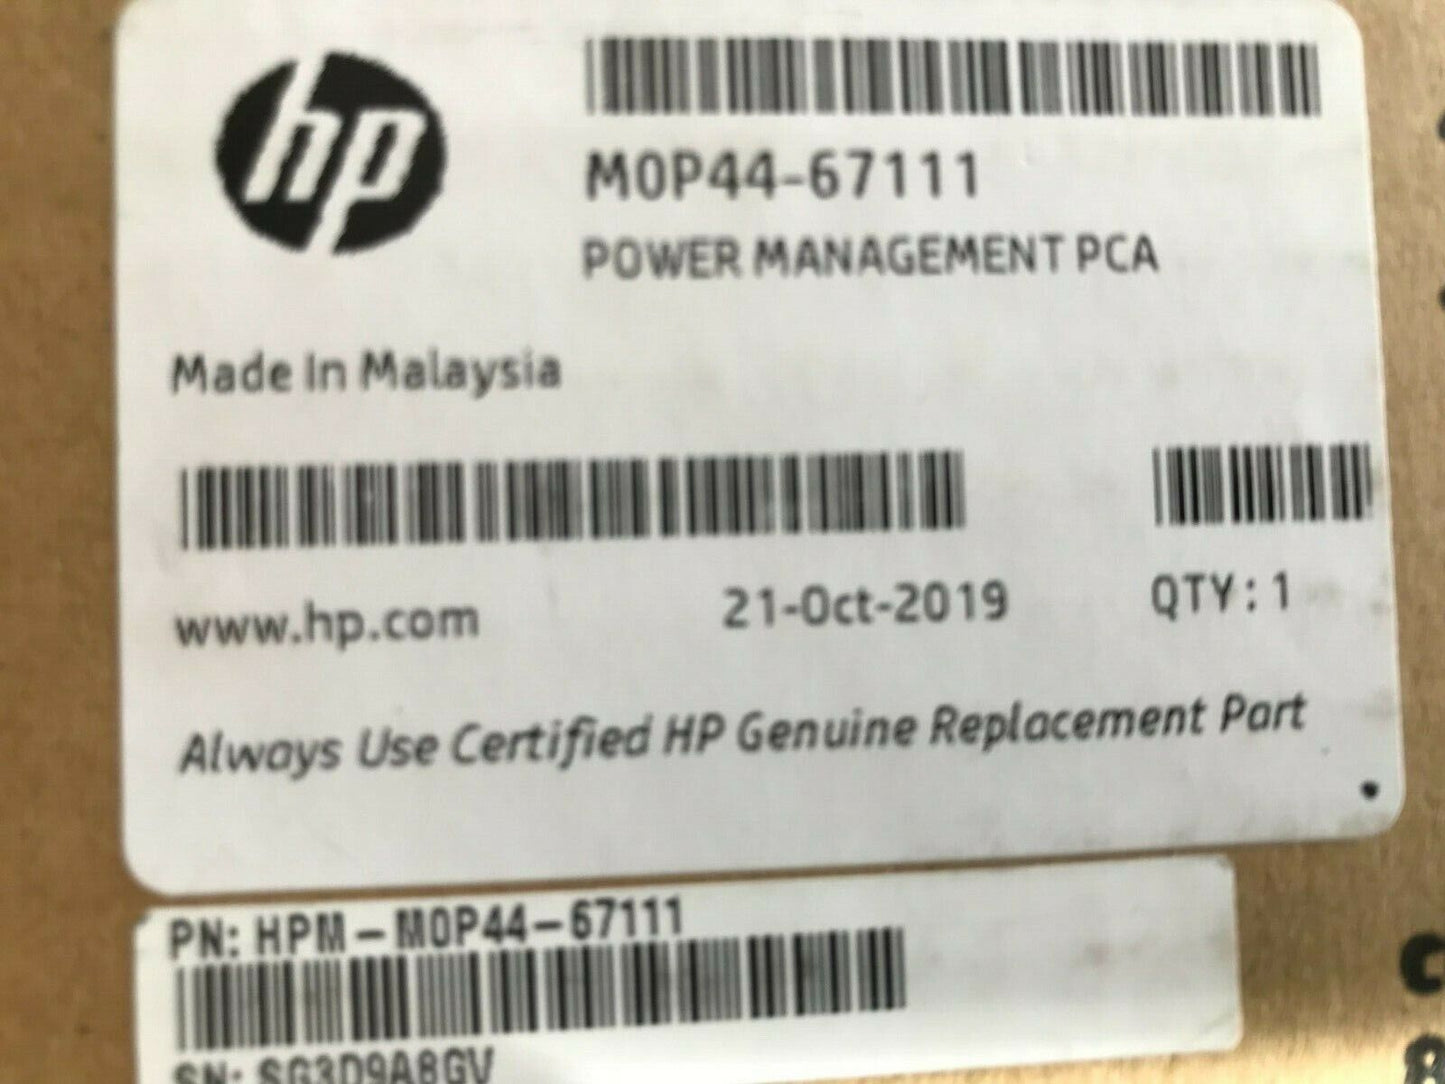 NEW SEALED HP M0P44-67111 Power Management PCA JET FUSION 3D 3200 4200 4210